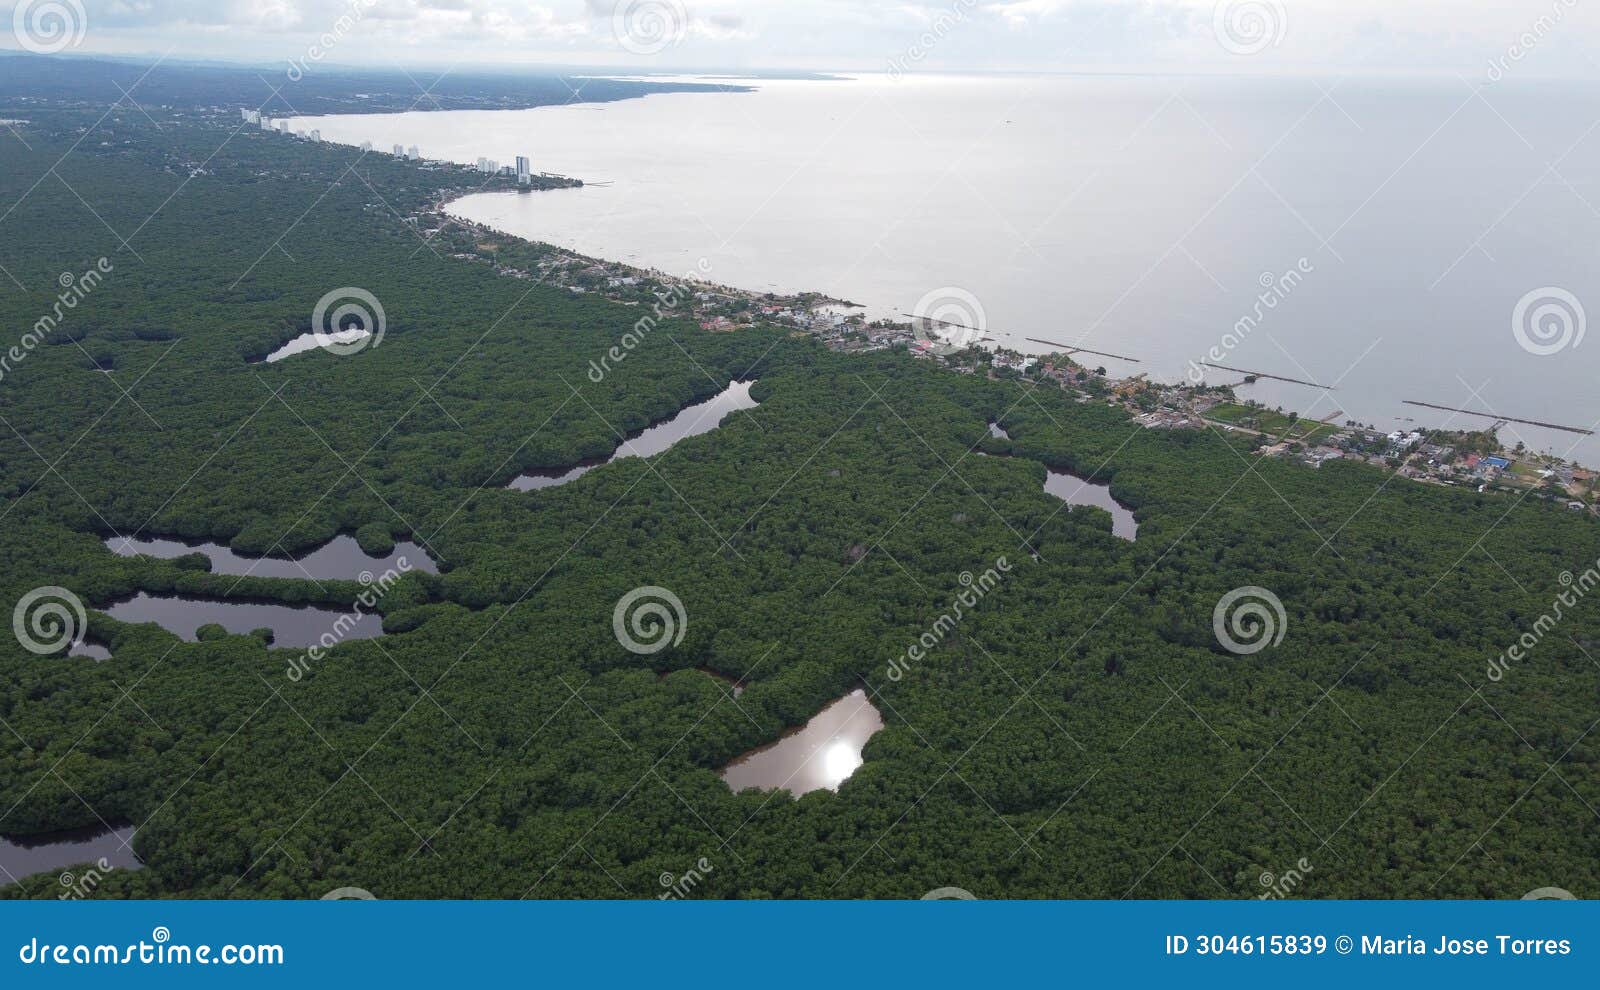 cienaga la caimanera landscape photography with drone over colombia